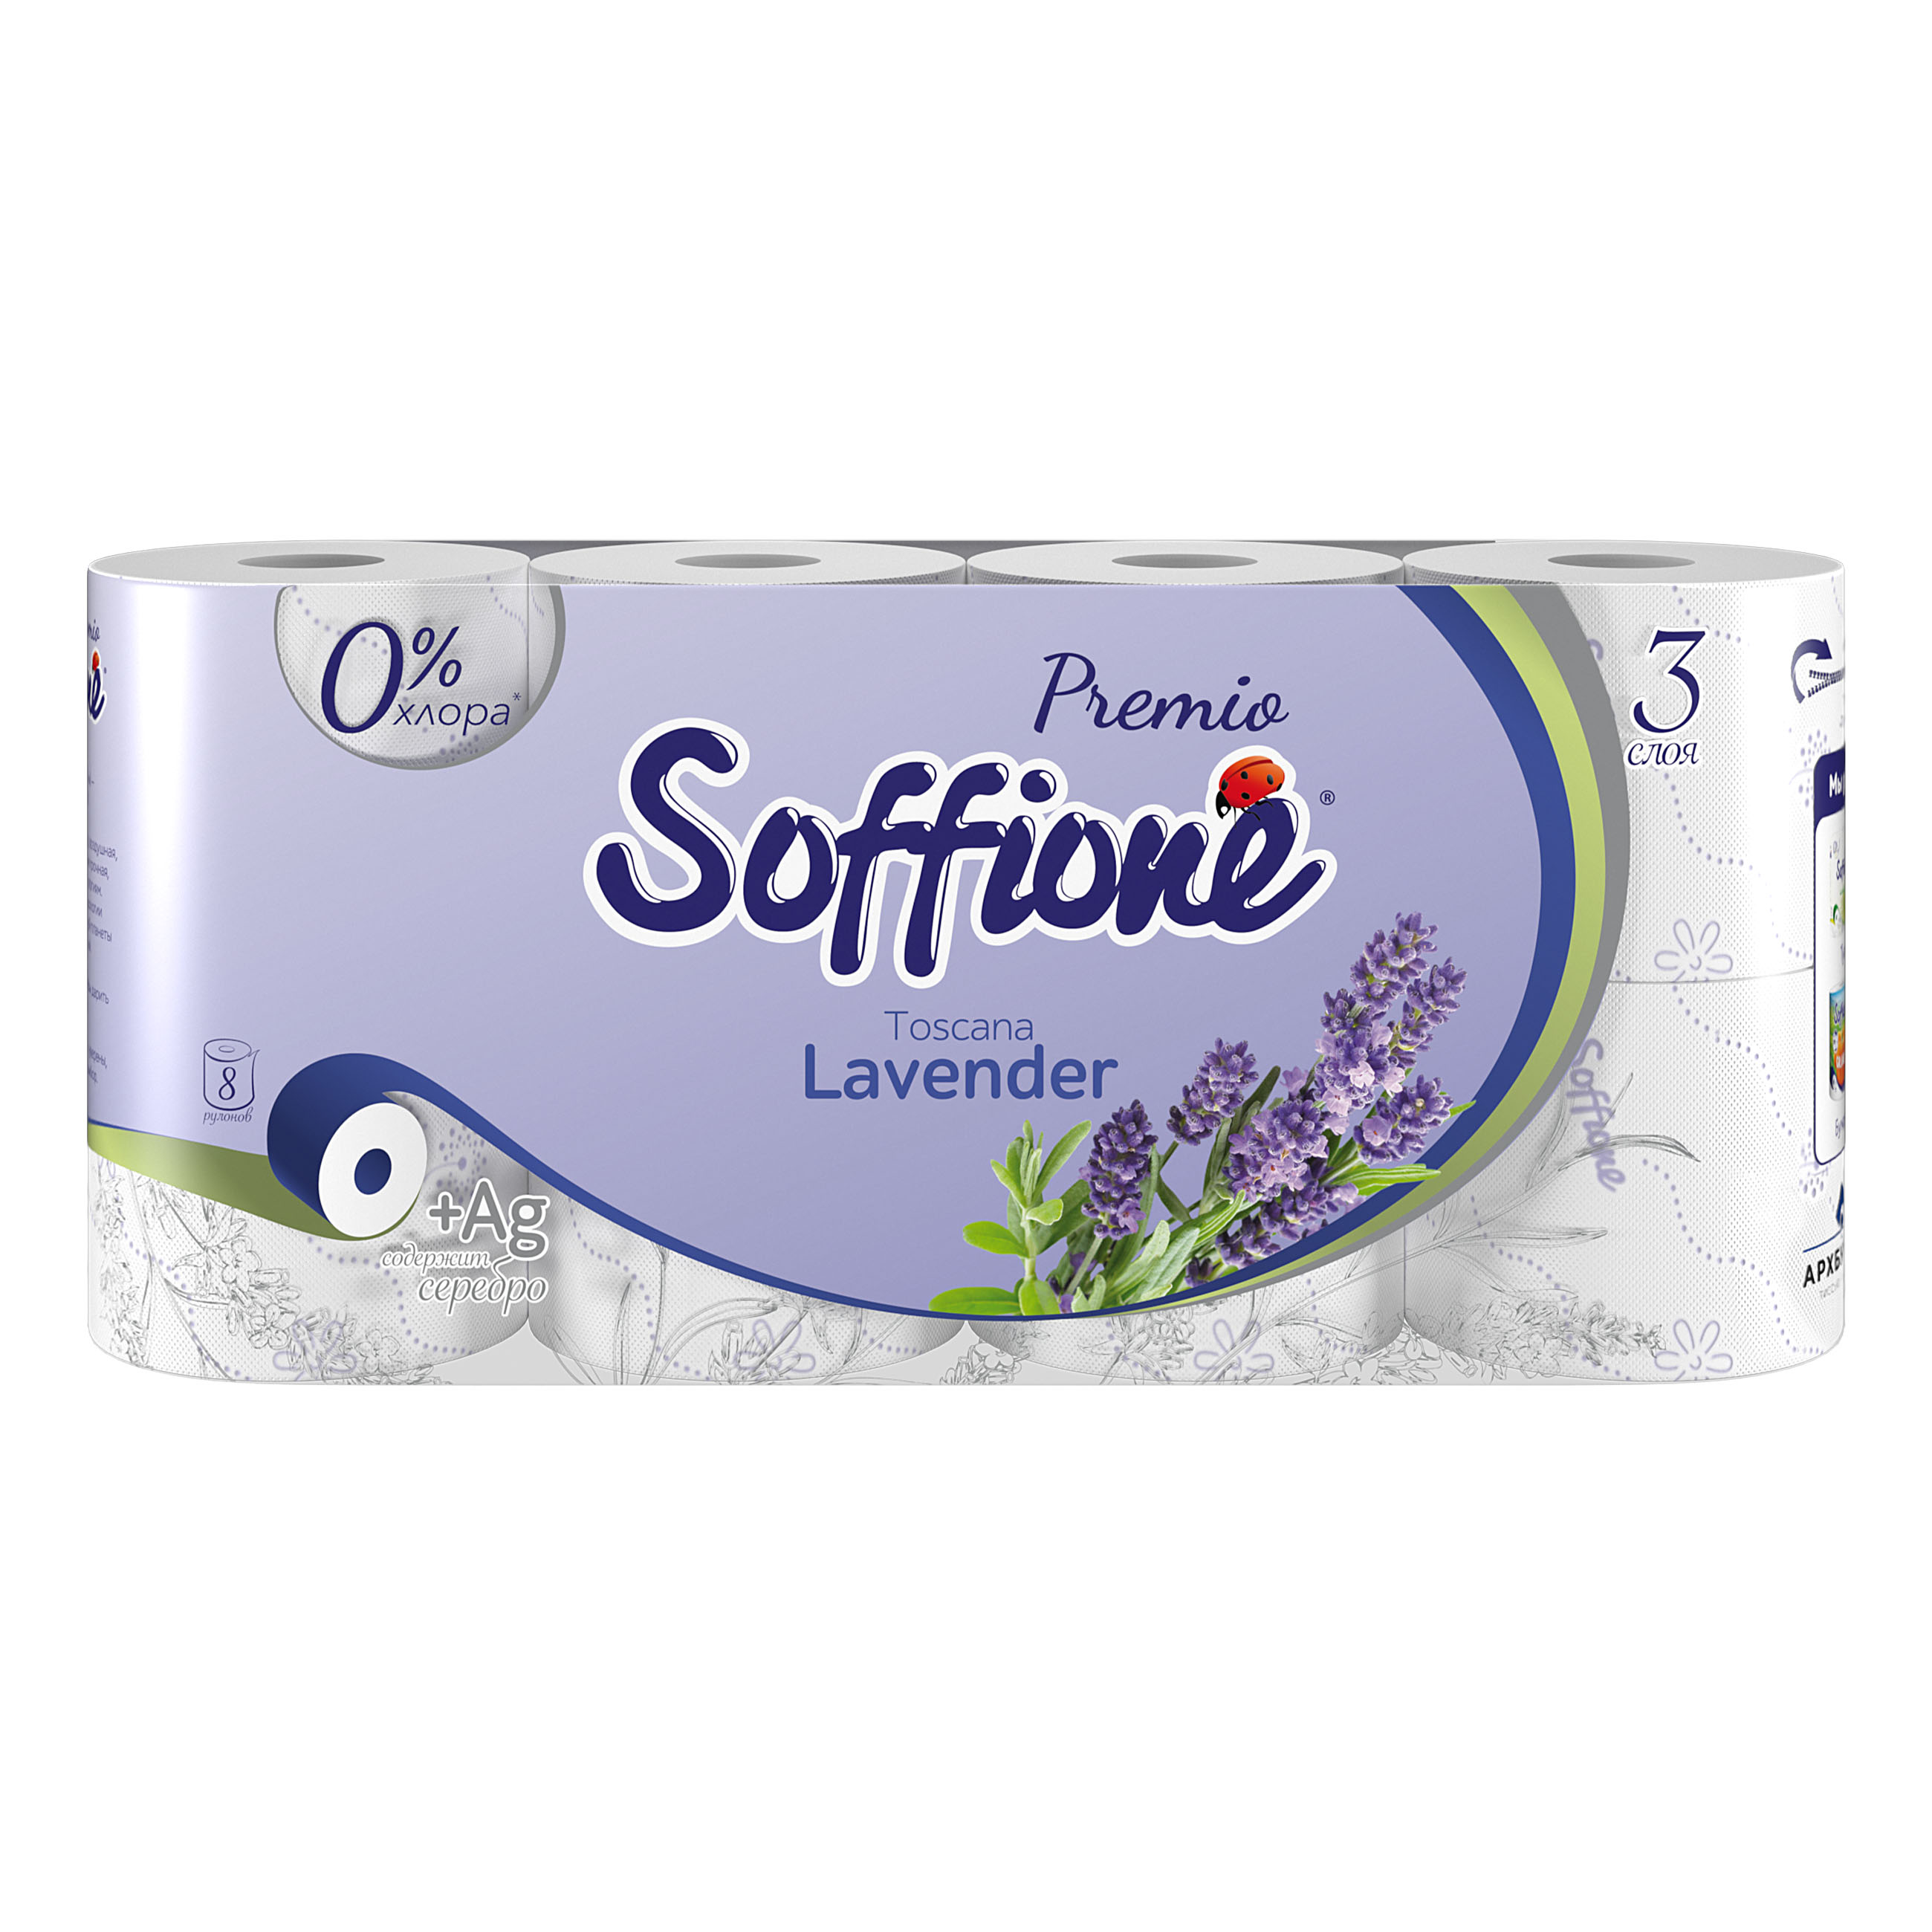 Туалетная бумага Soffione Premio Toscana Lavender трехслойная, с тиснением, лаванда, 8 шт.